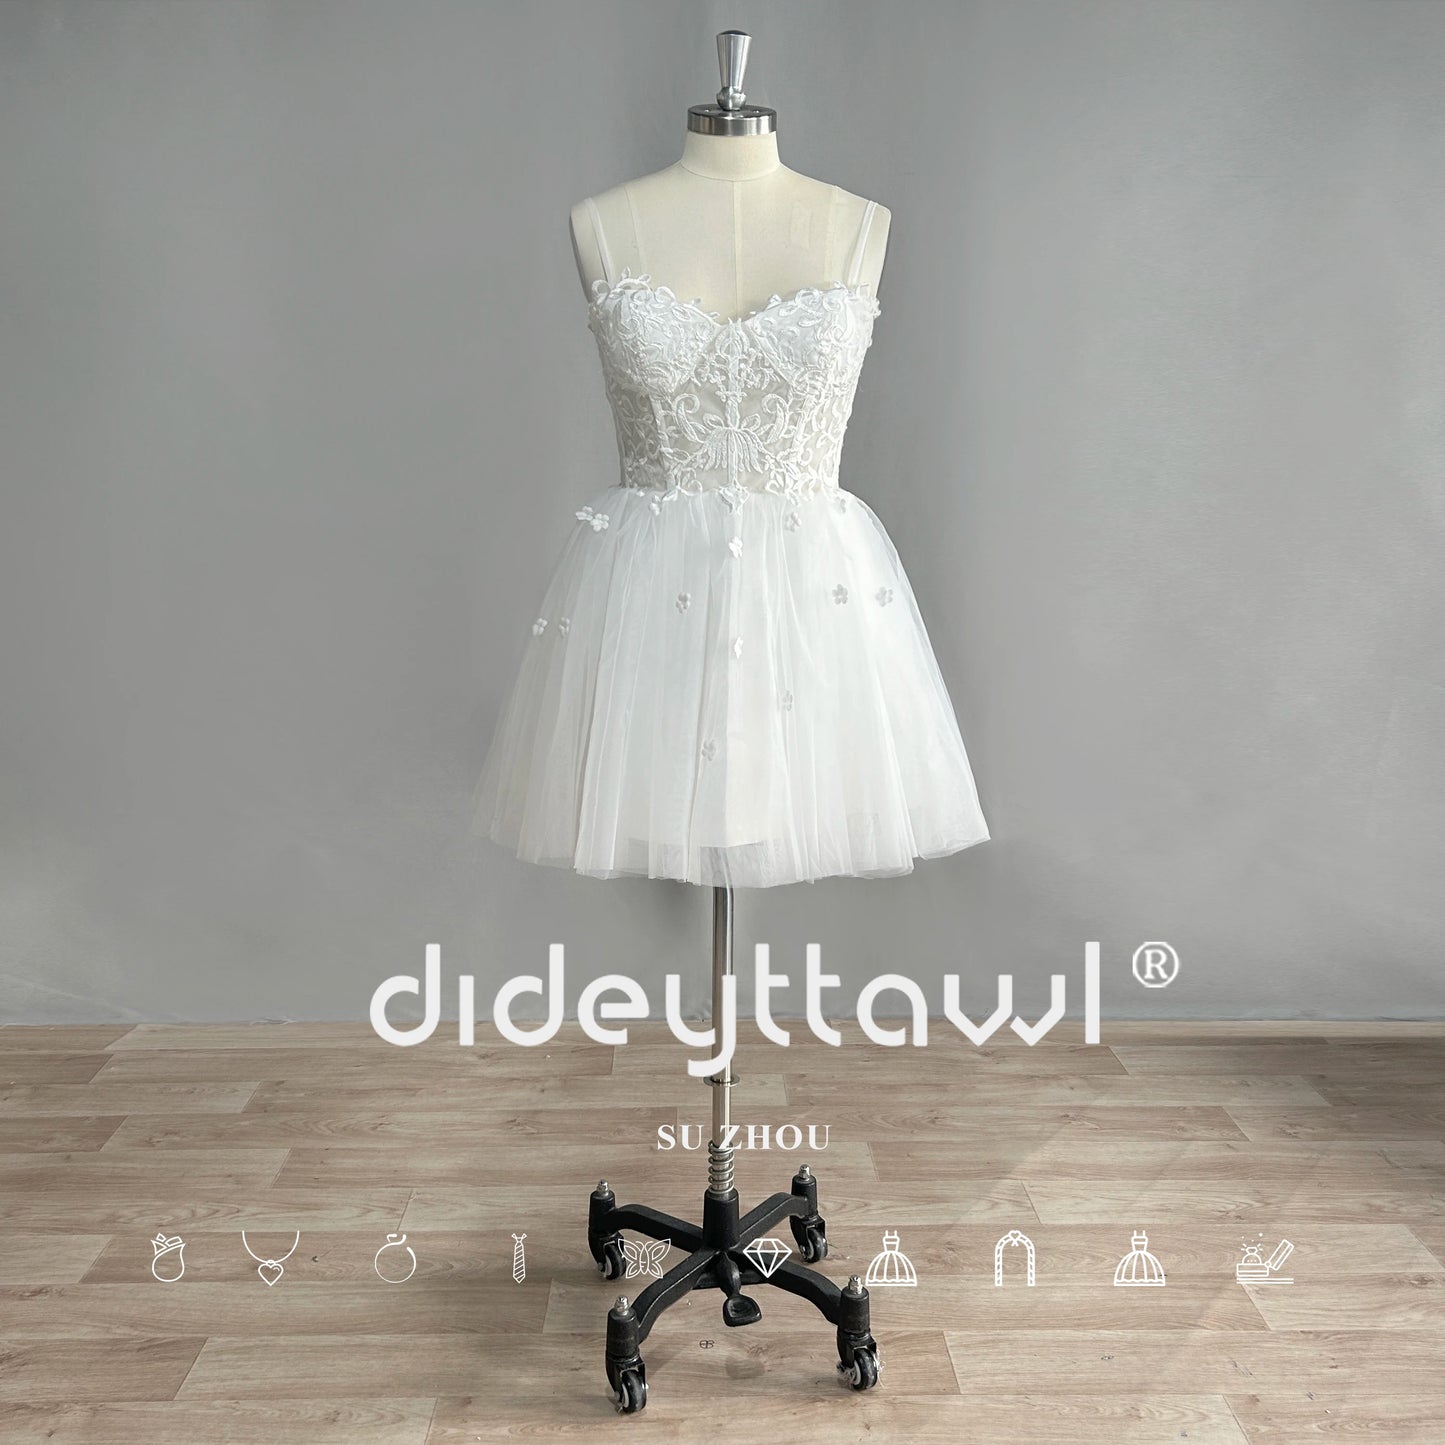 Dideyttawl מתוקה שרוולים ארוכים טול שמלת כלה קצרה אורך מיני מעל שמלת כלה כתף תמונה אמיתית